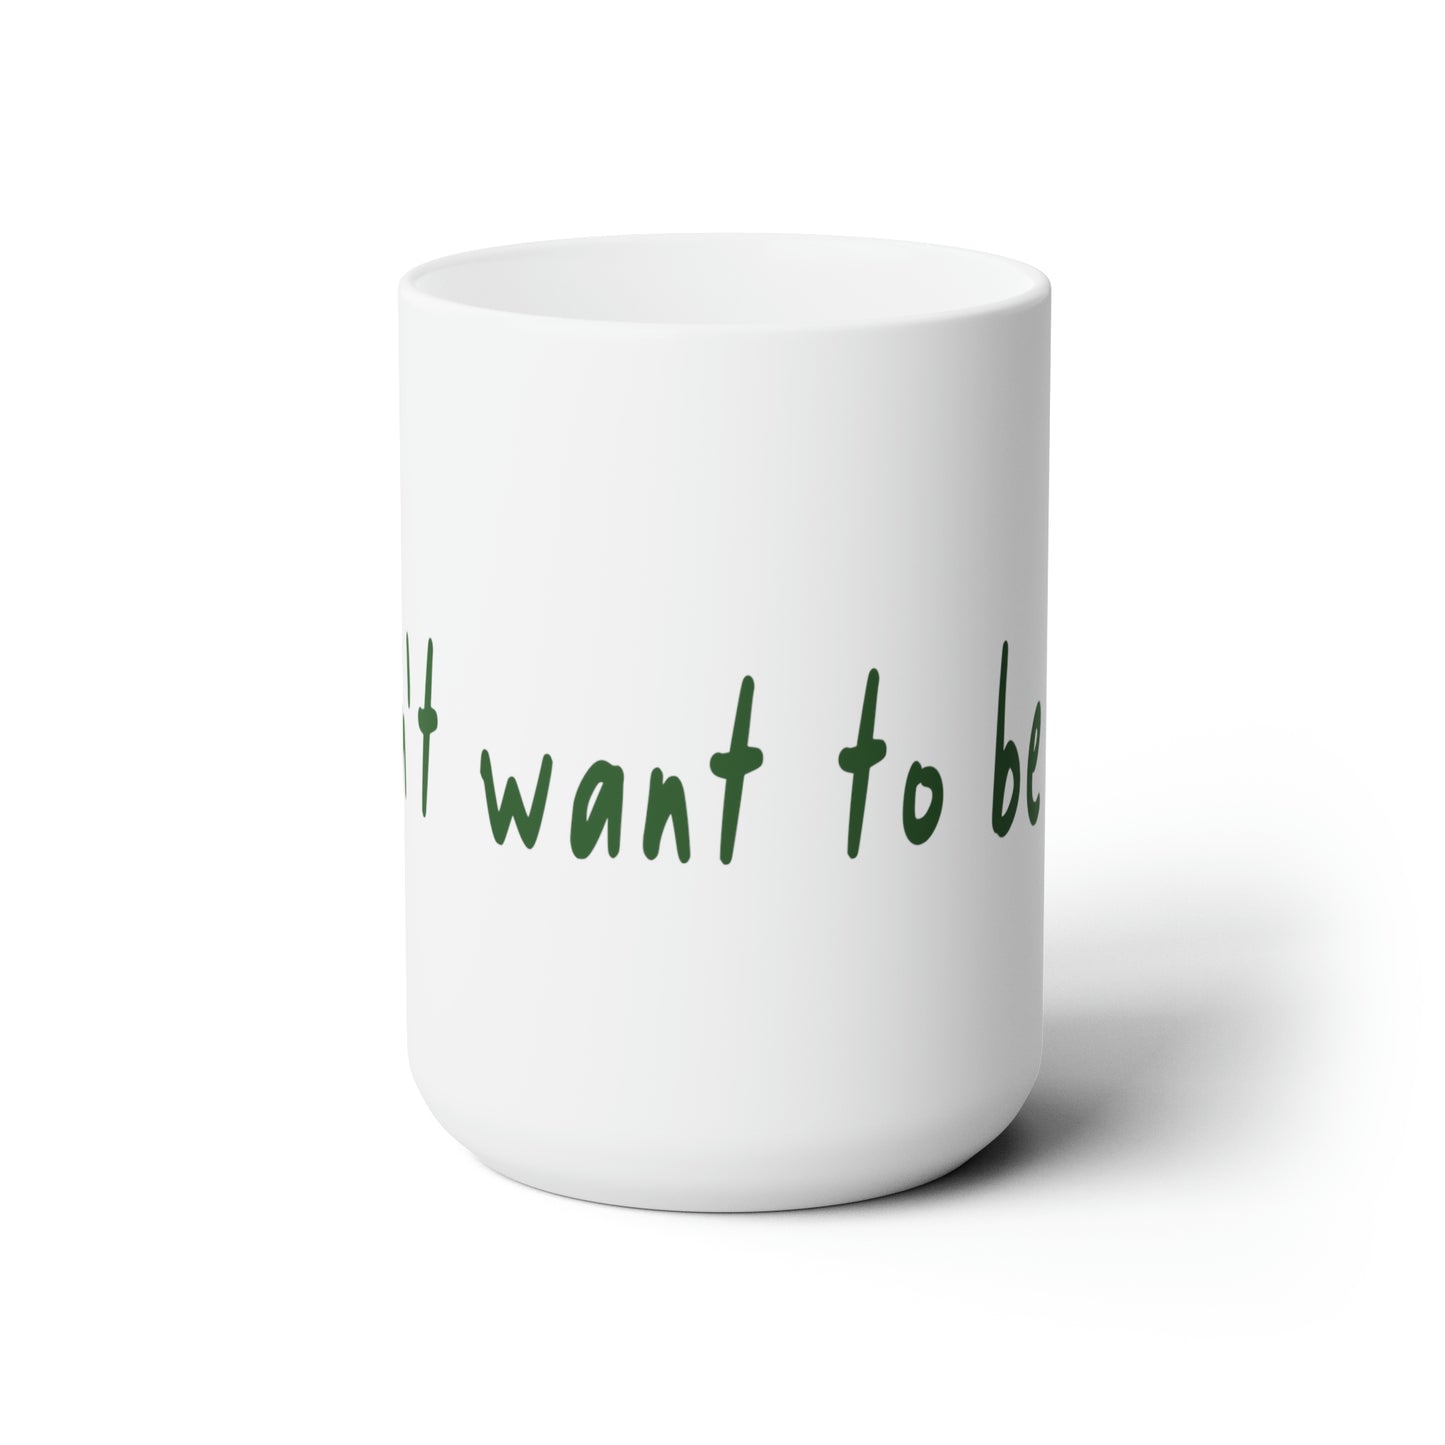 I Don't Want To Be Here - Ceramic Mug 15oz